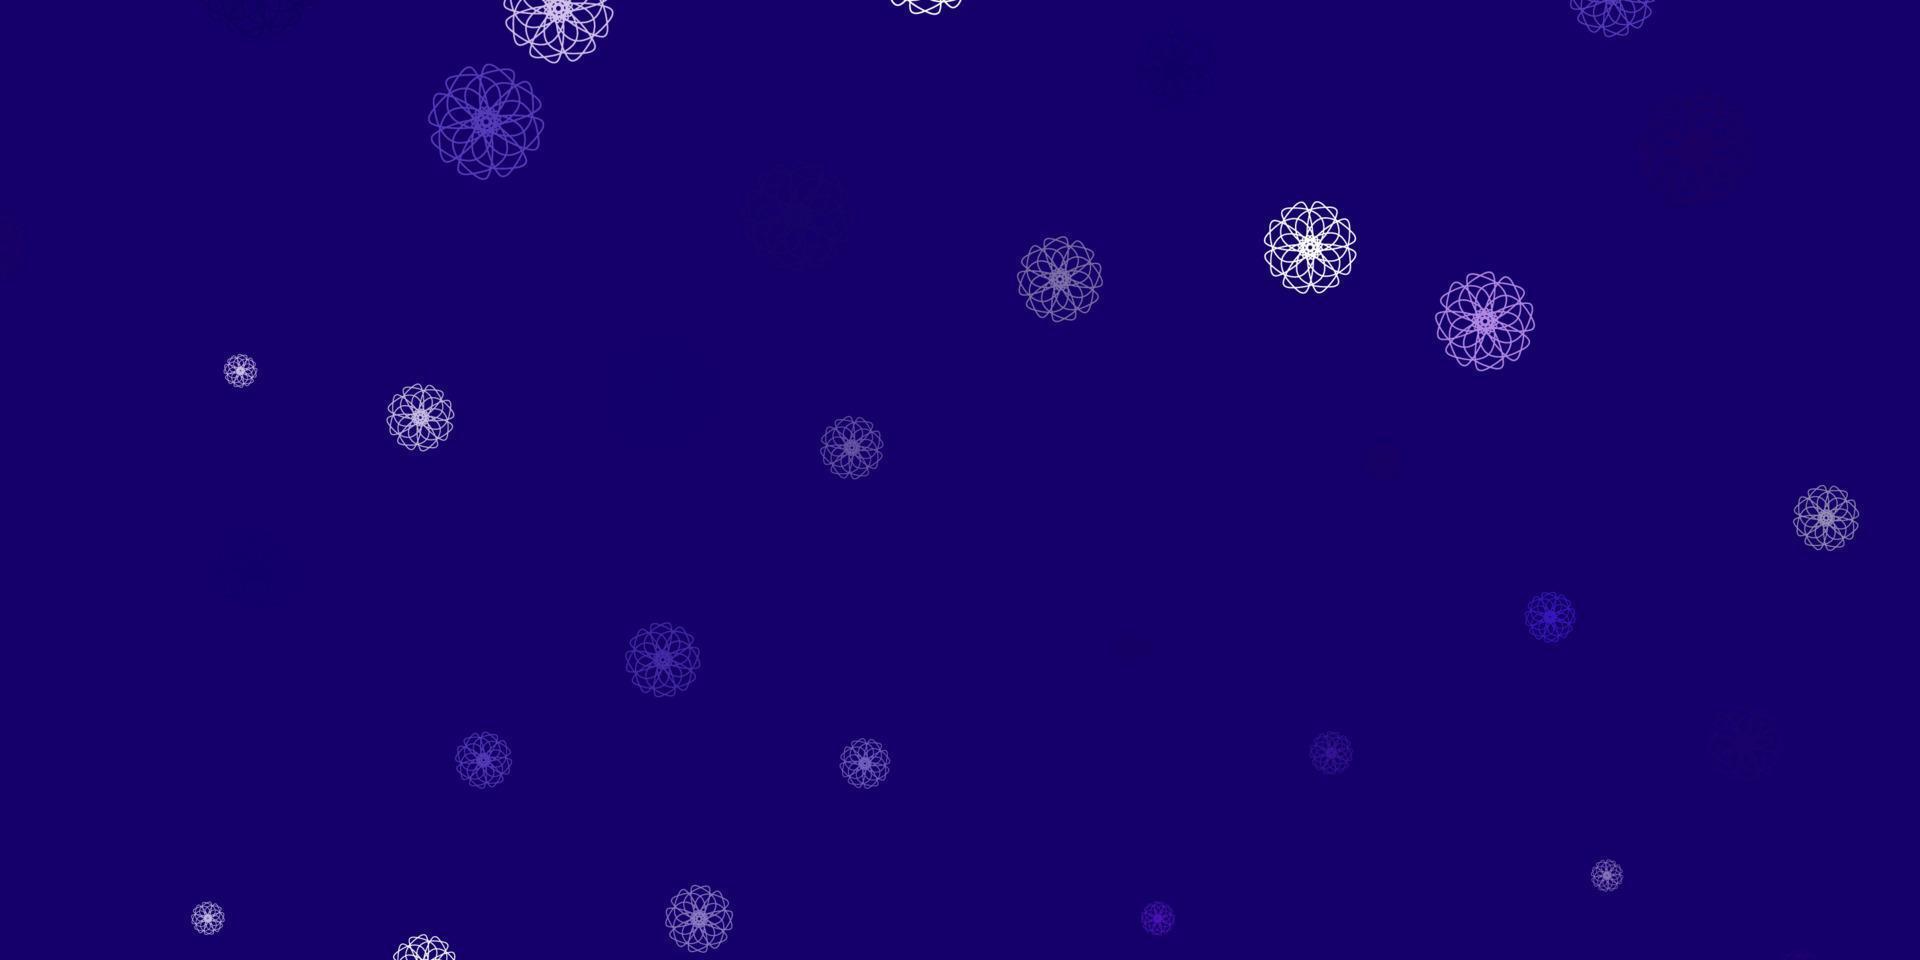 patrón de doodle de vector púrpura claro con flores.